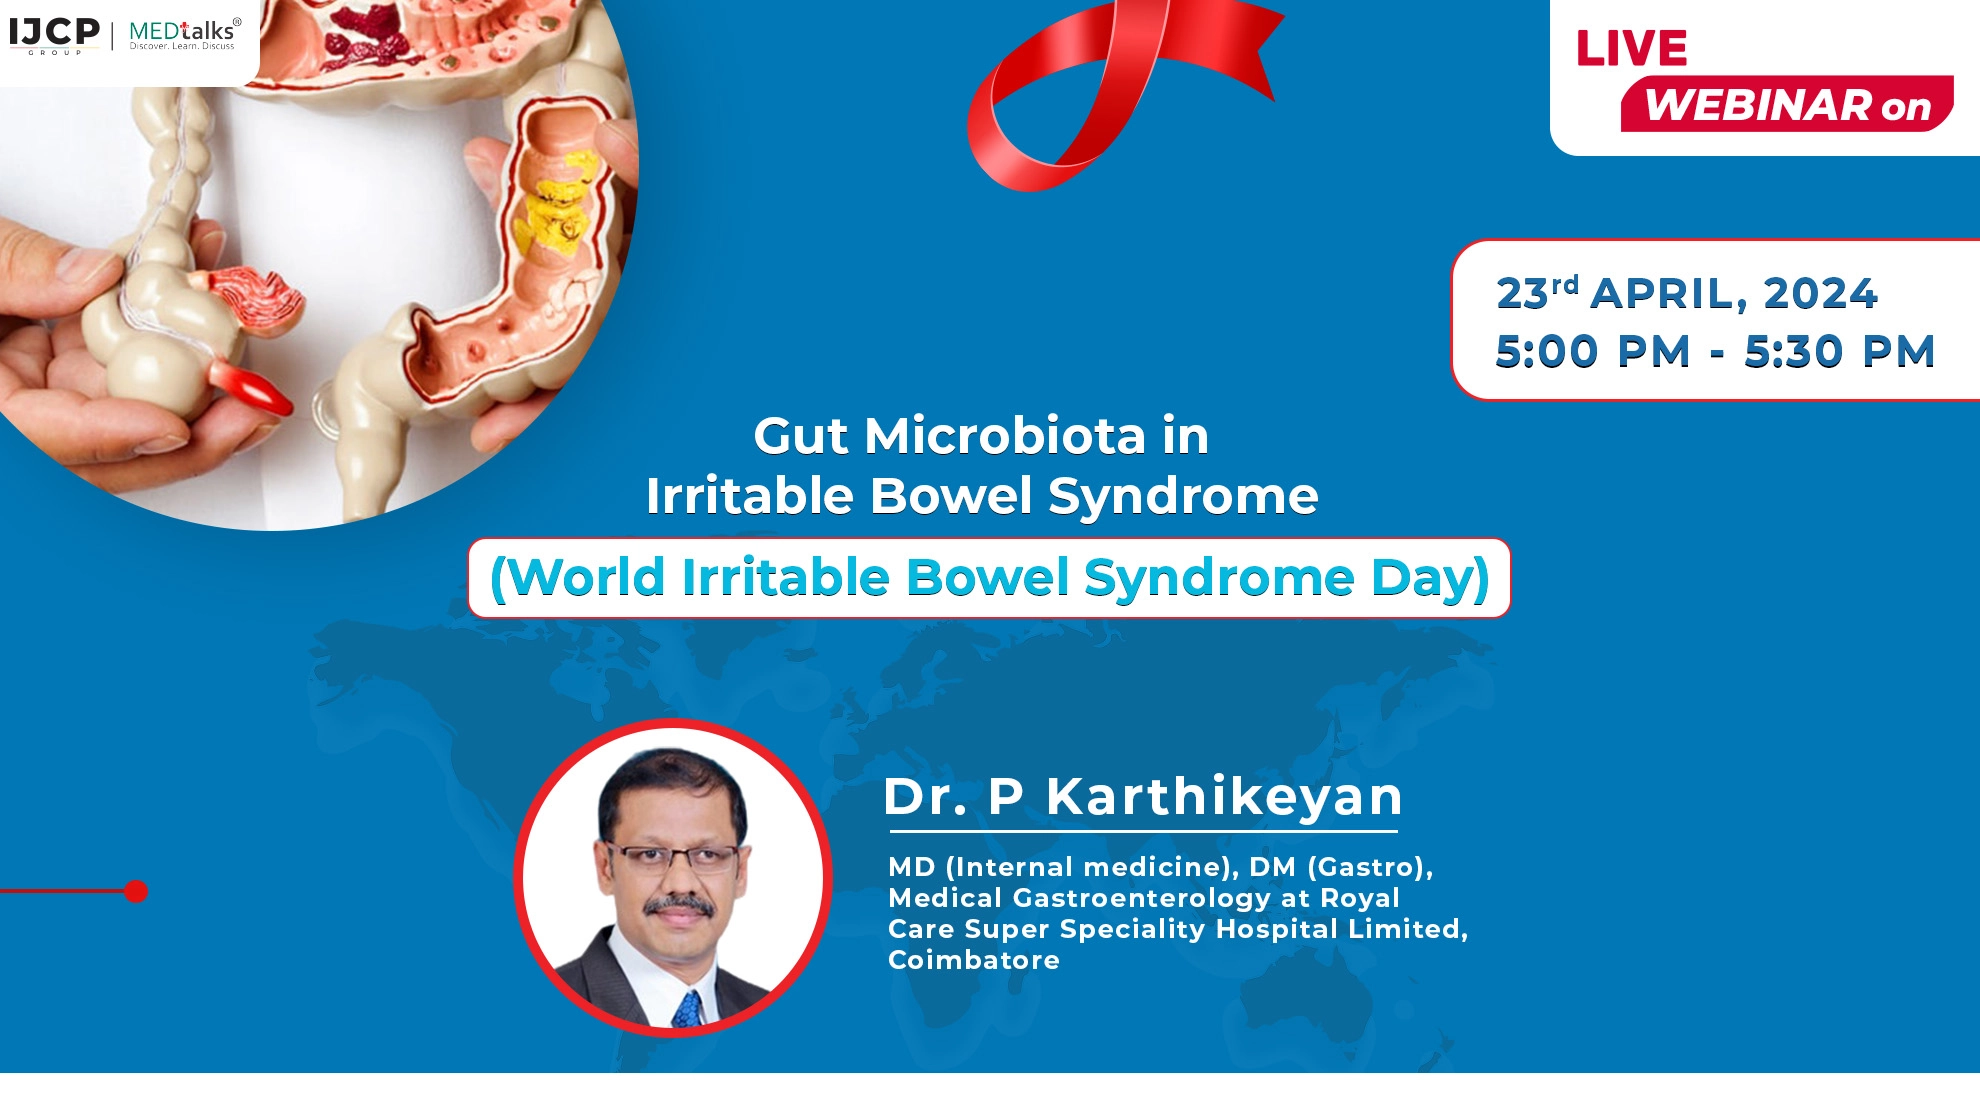 Gut Microbiota in Irritable Bowel Syndrome (World Irritable Bowel Syndrome Day)